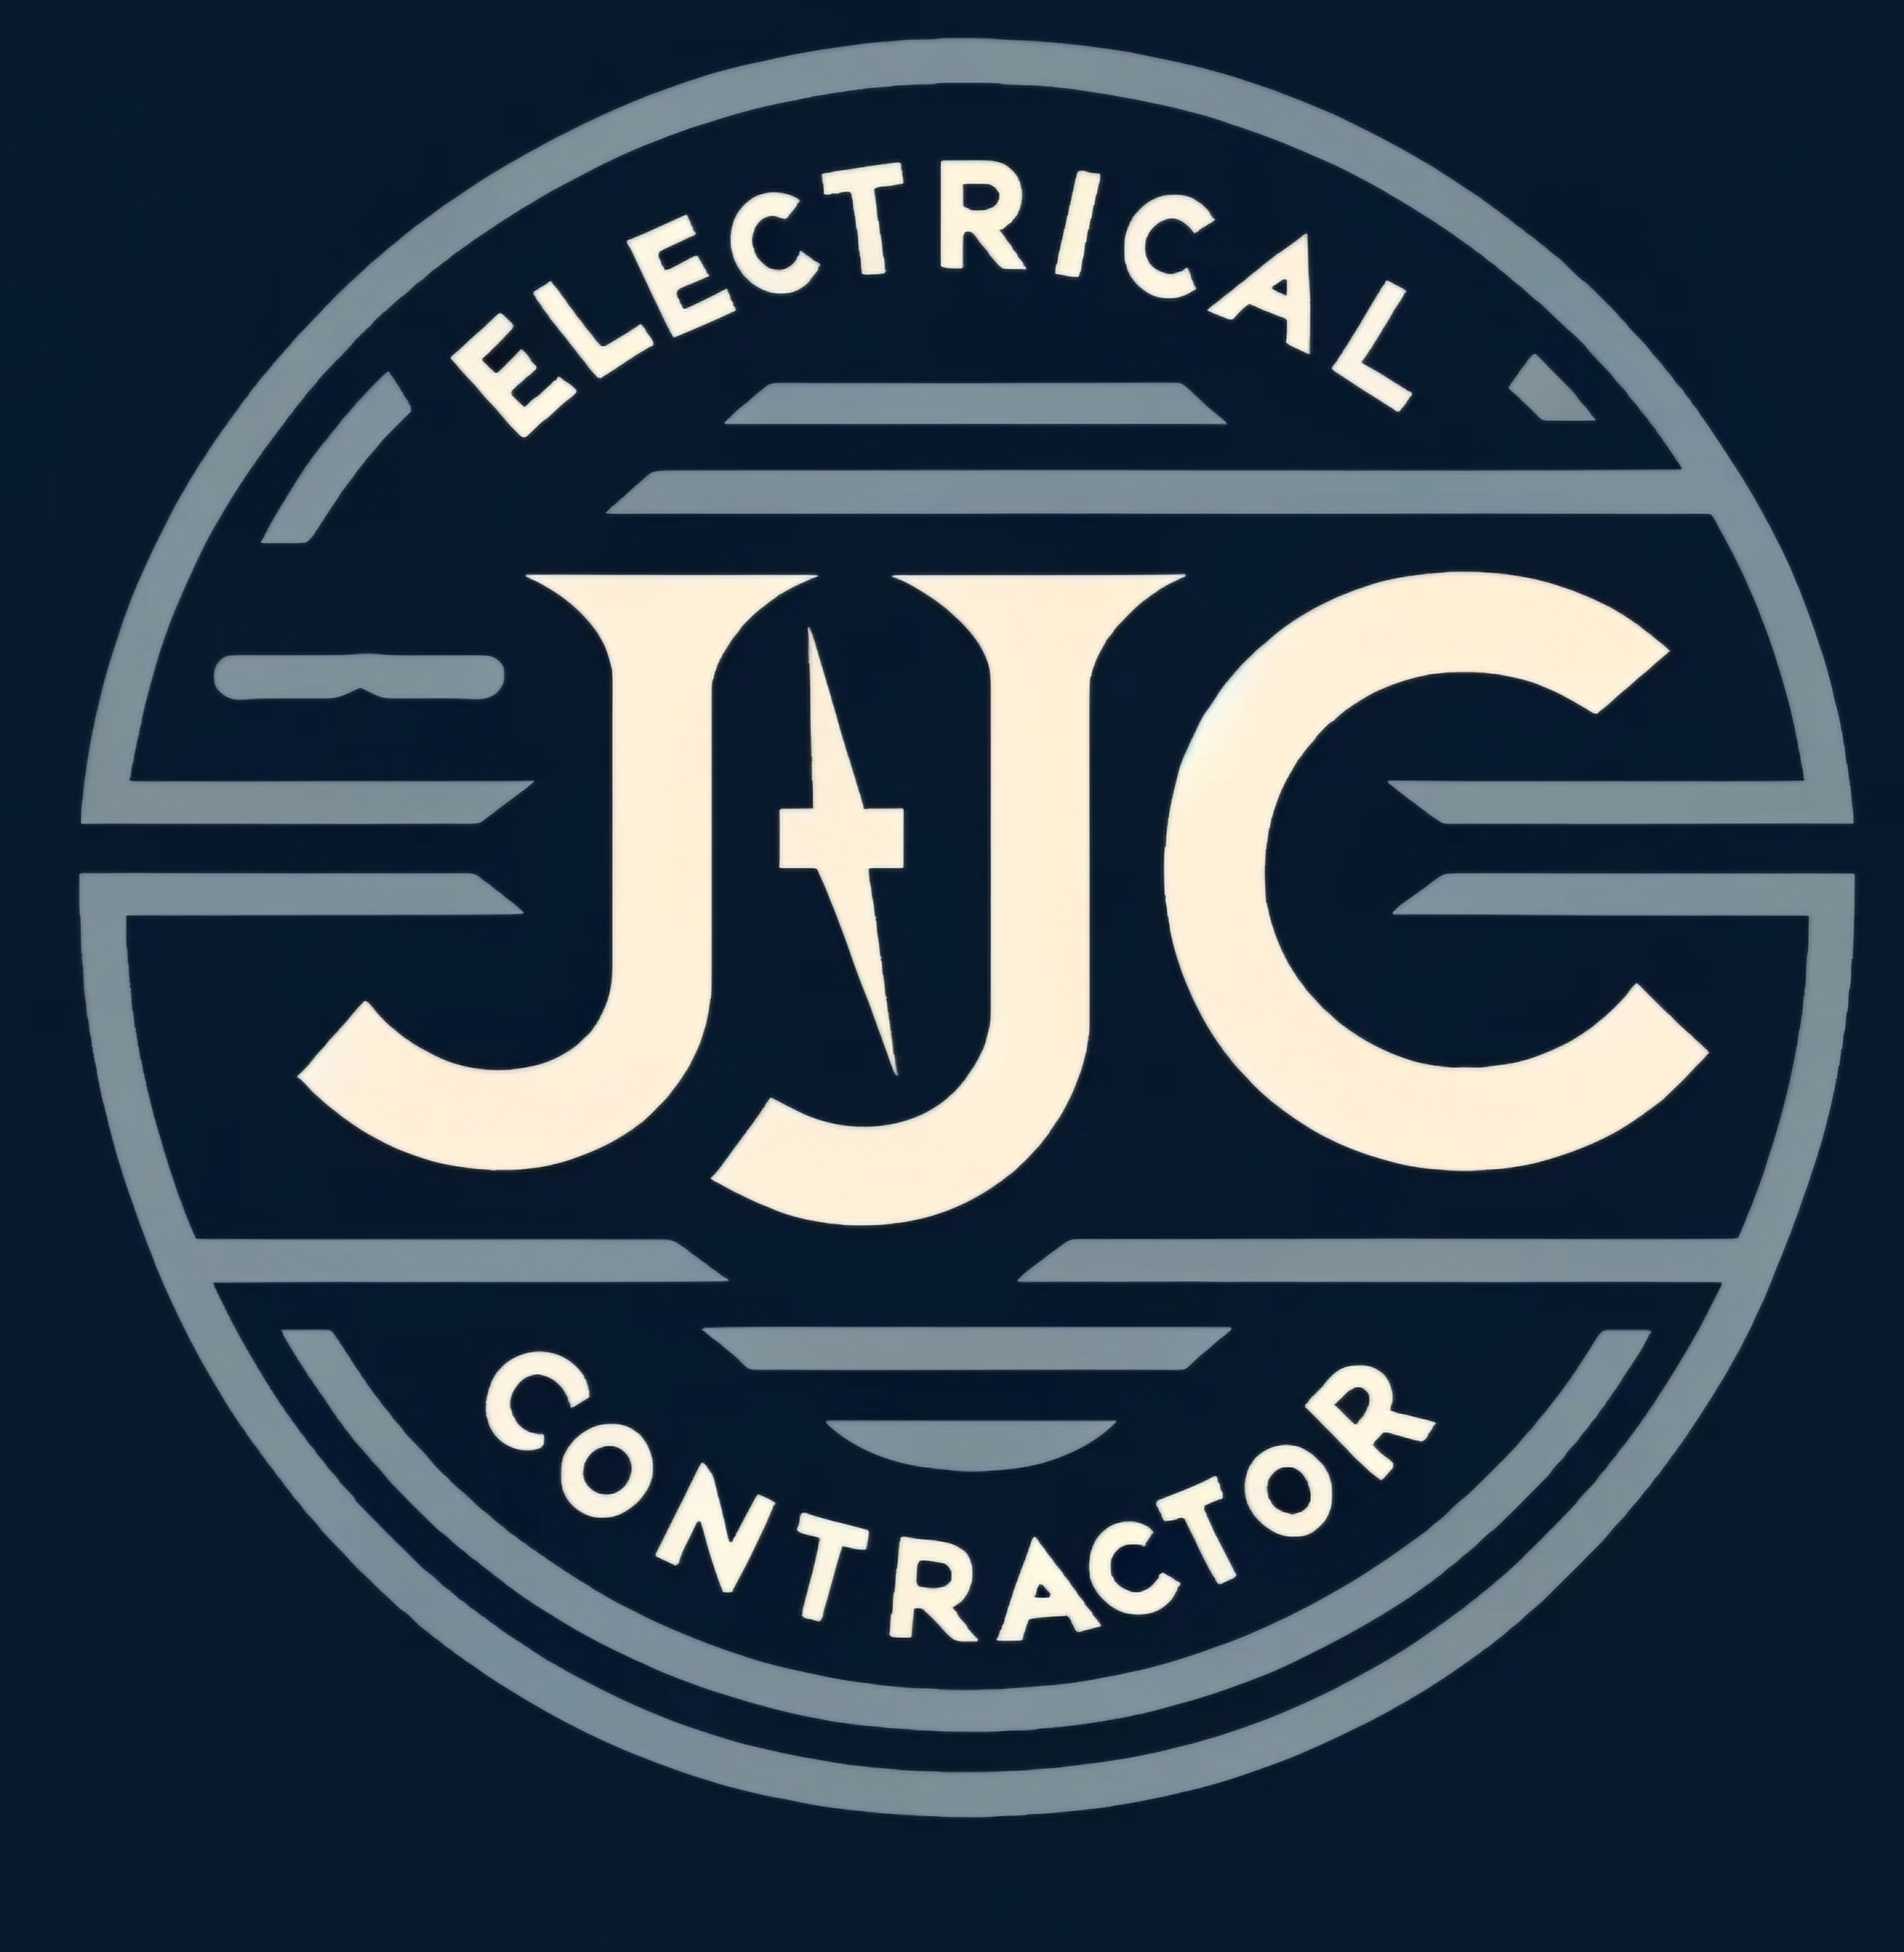 JJC logo